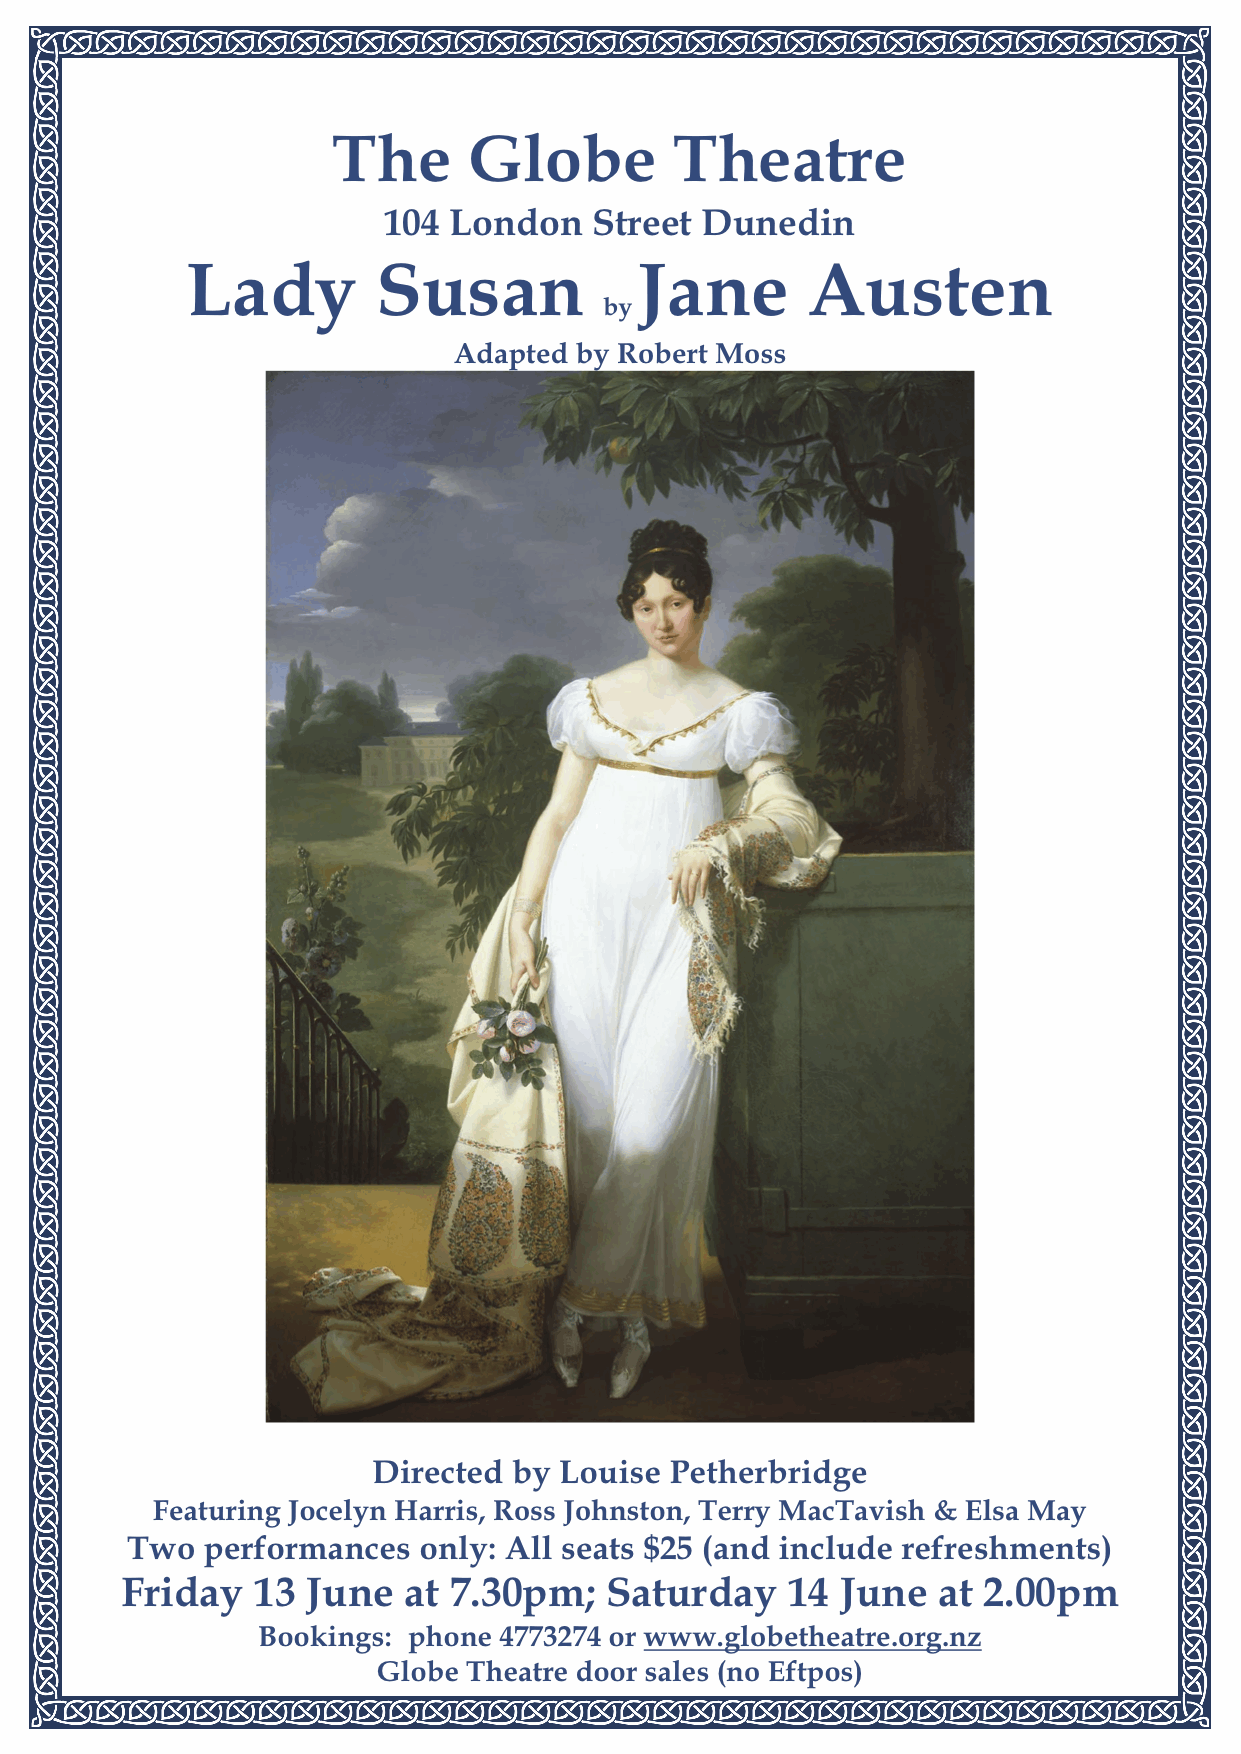 Lady Susan poster